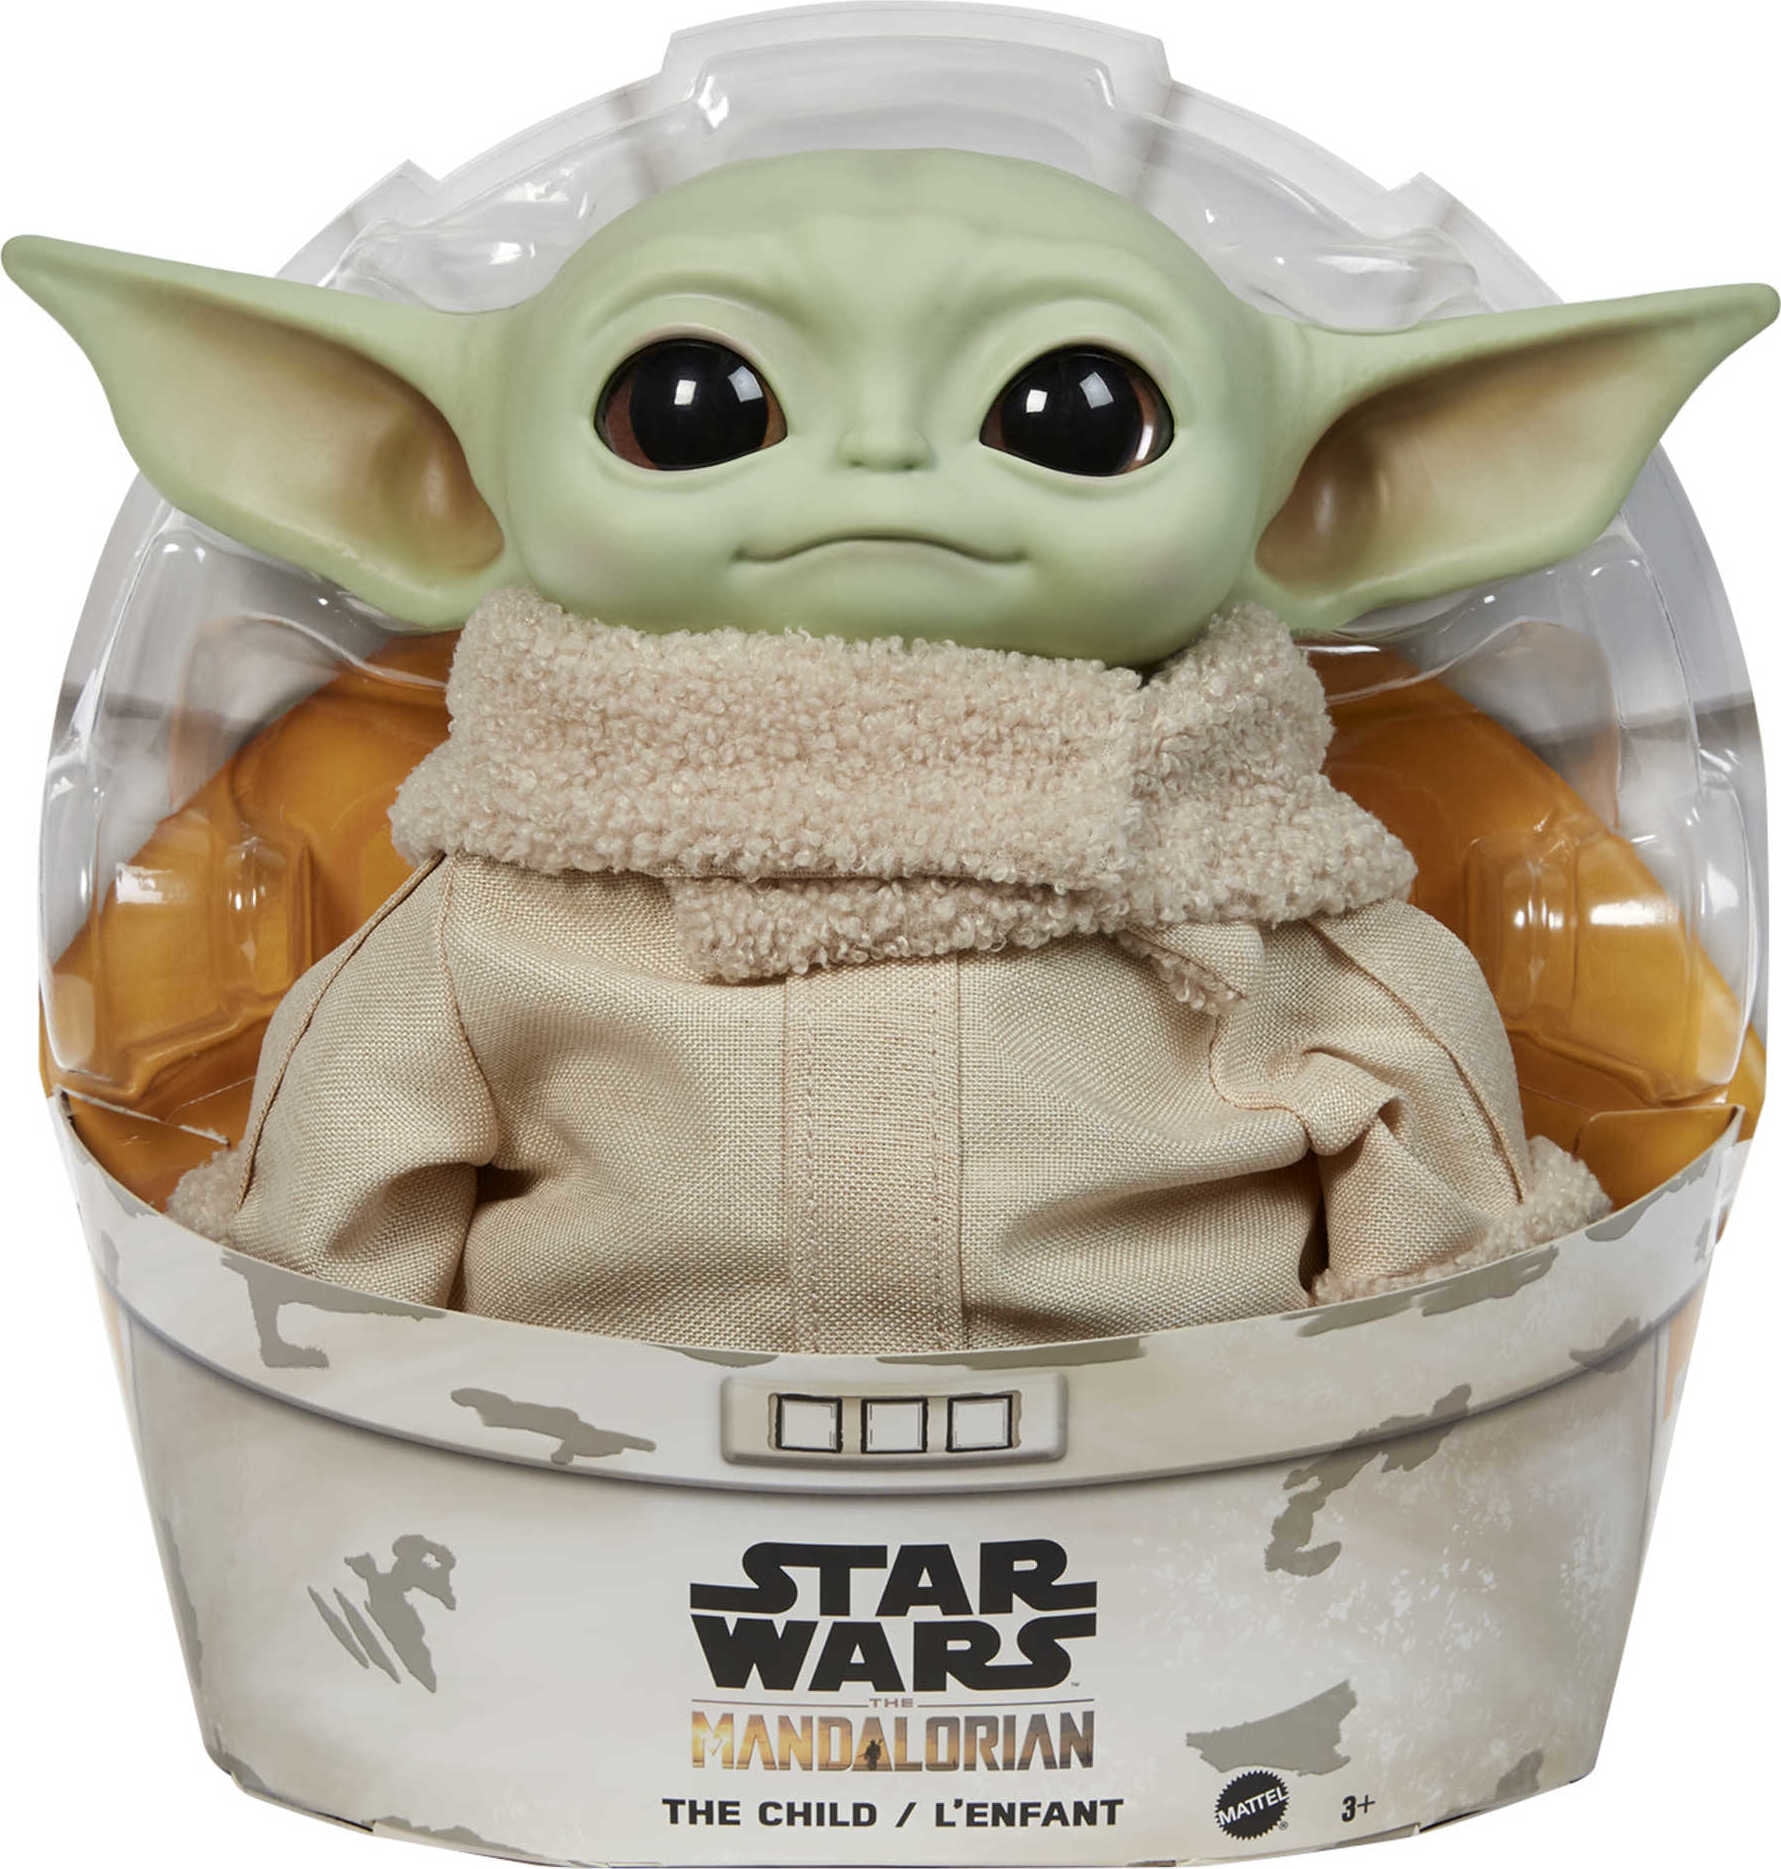 The Mandalorian Baby Yoda “The Child” 11” Plush Star Wars 